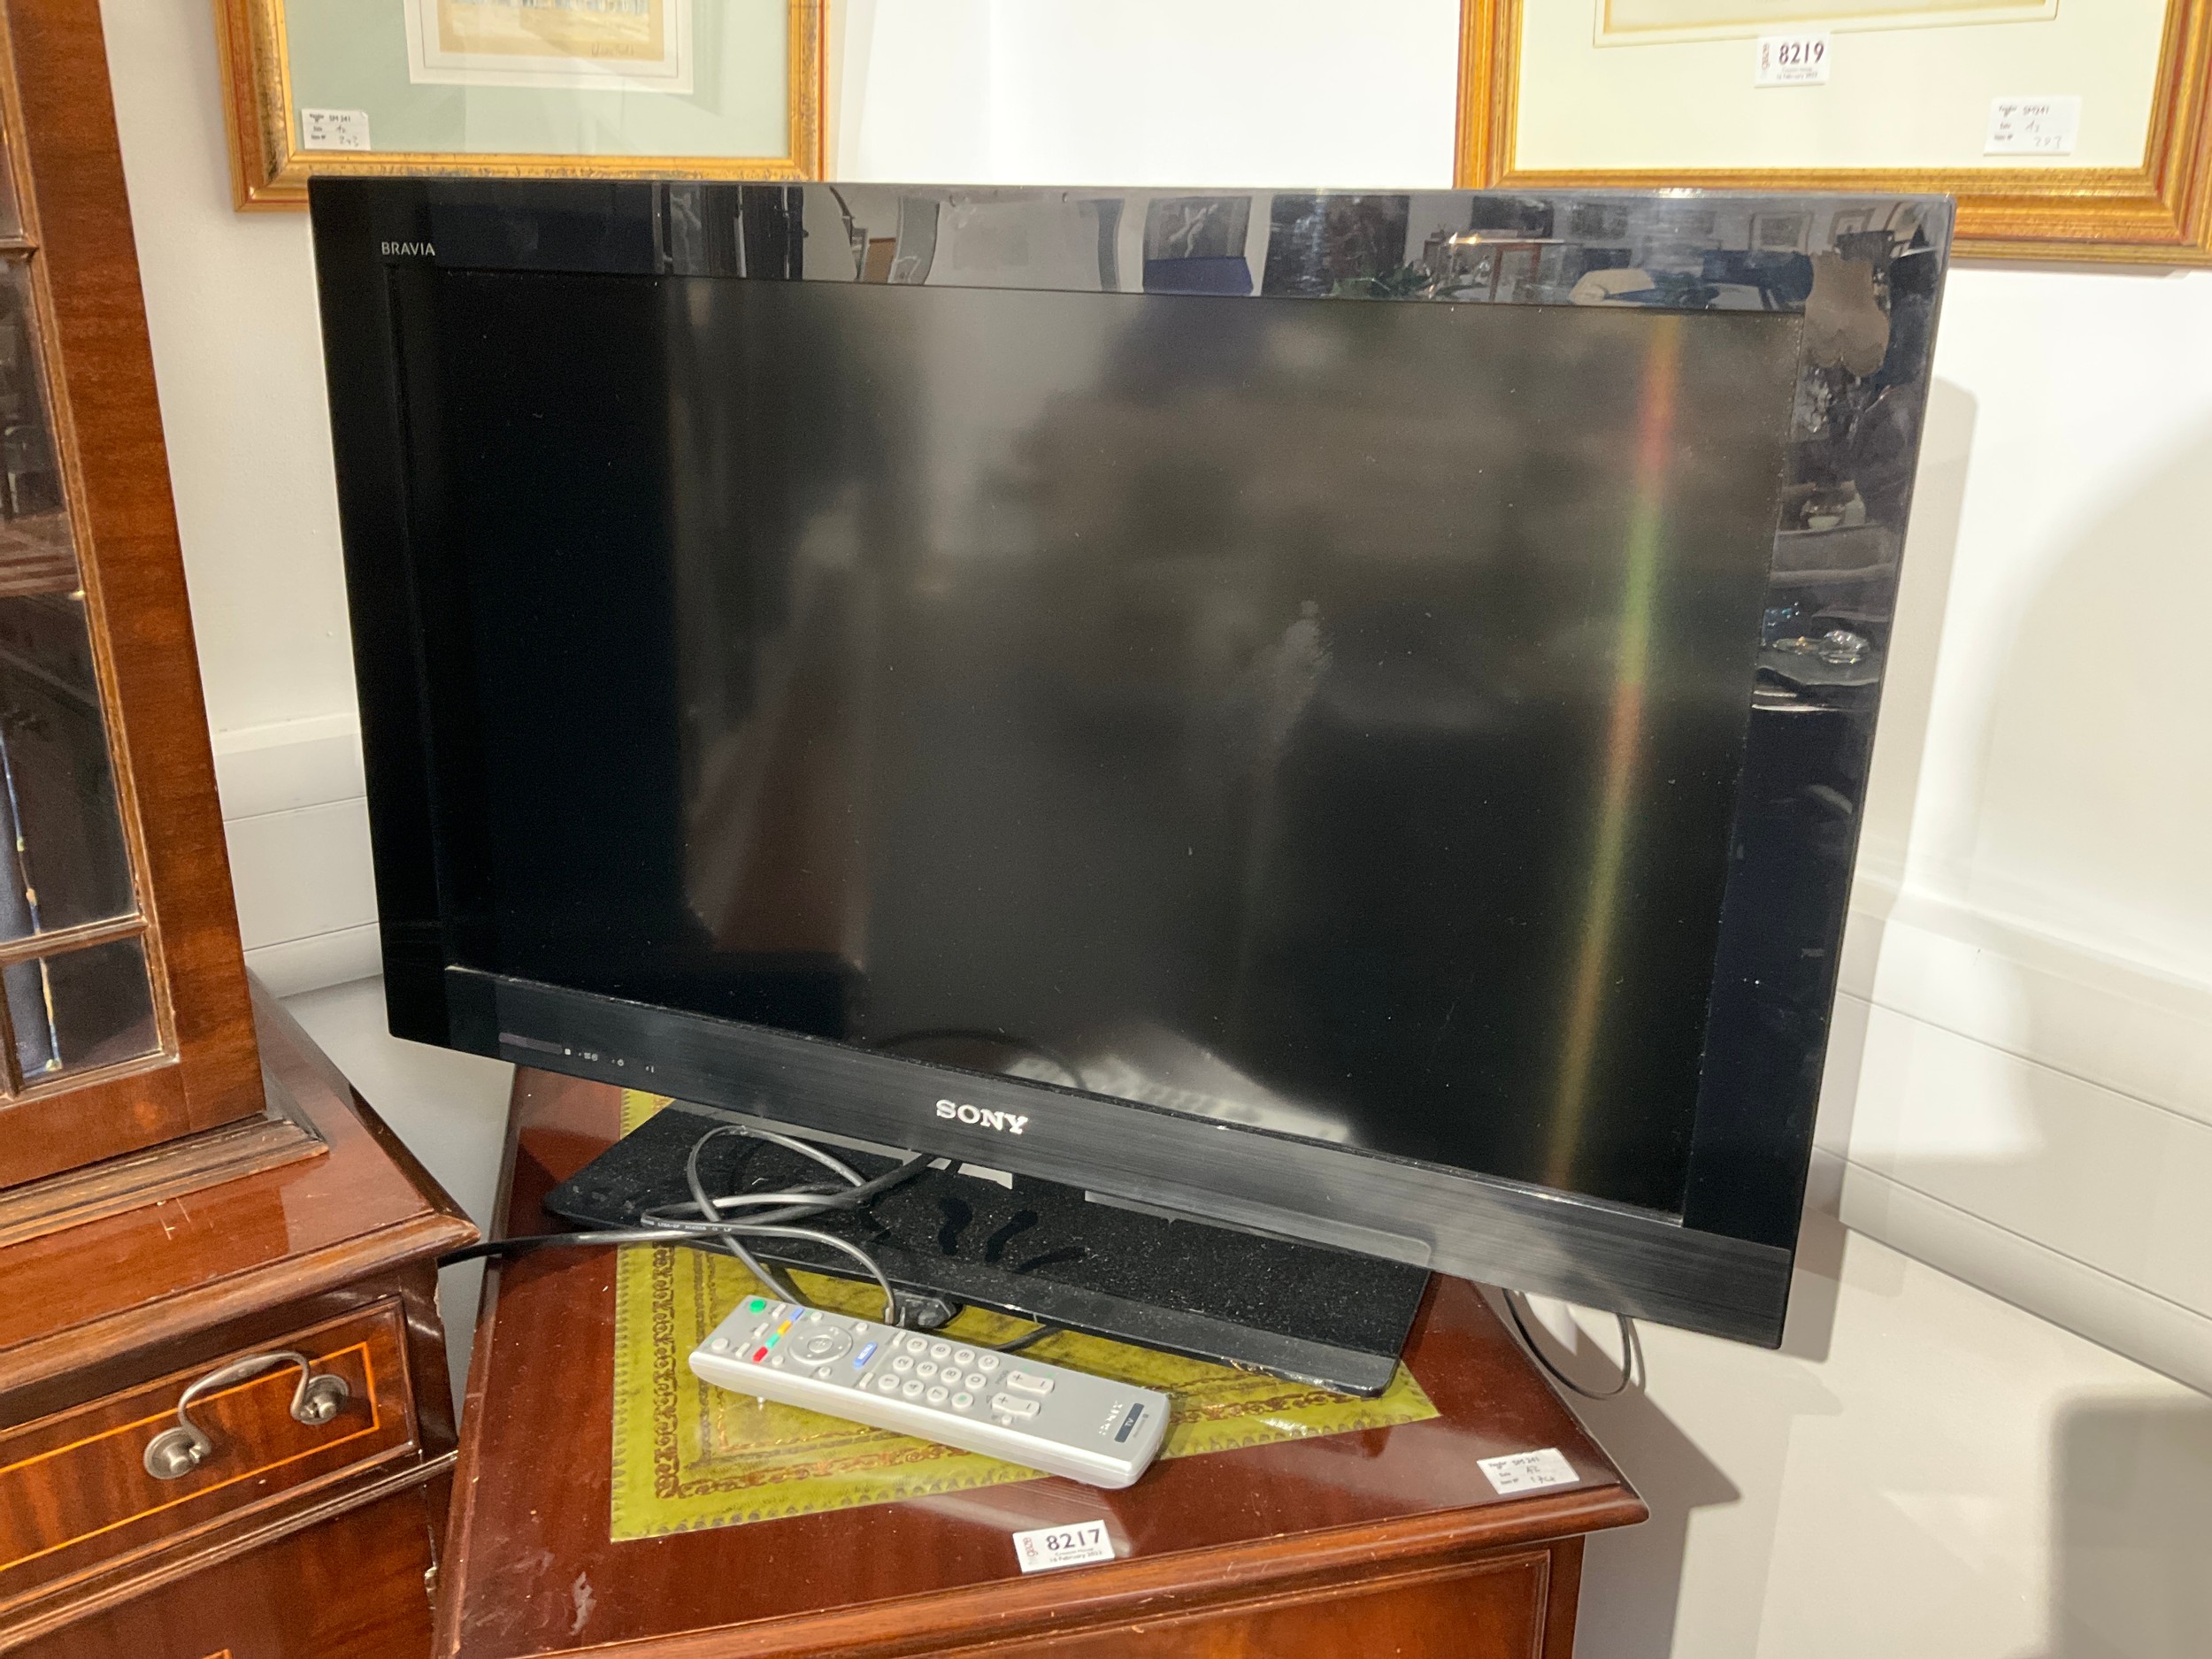 A Sony Bravia flatscreen TV Model No. KDL-32CX520, 31.5" screen